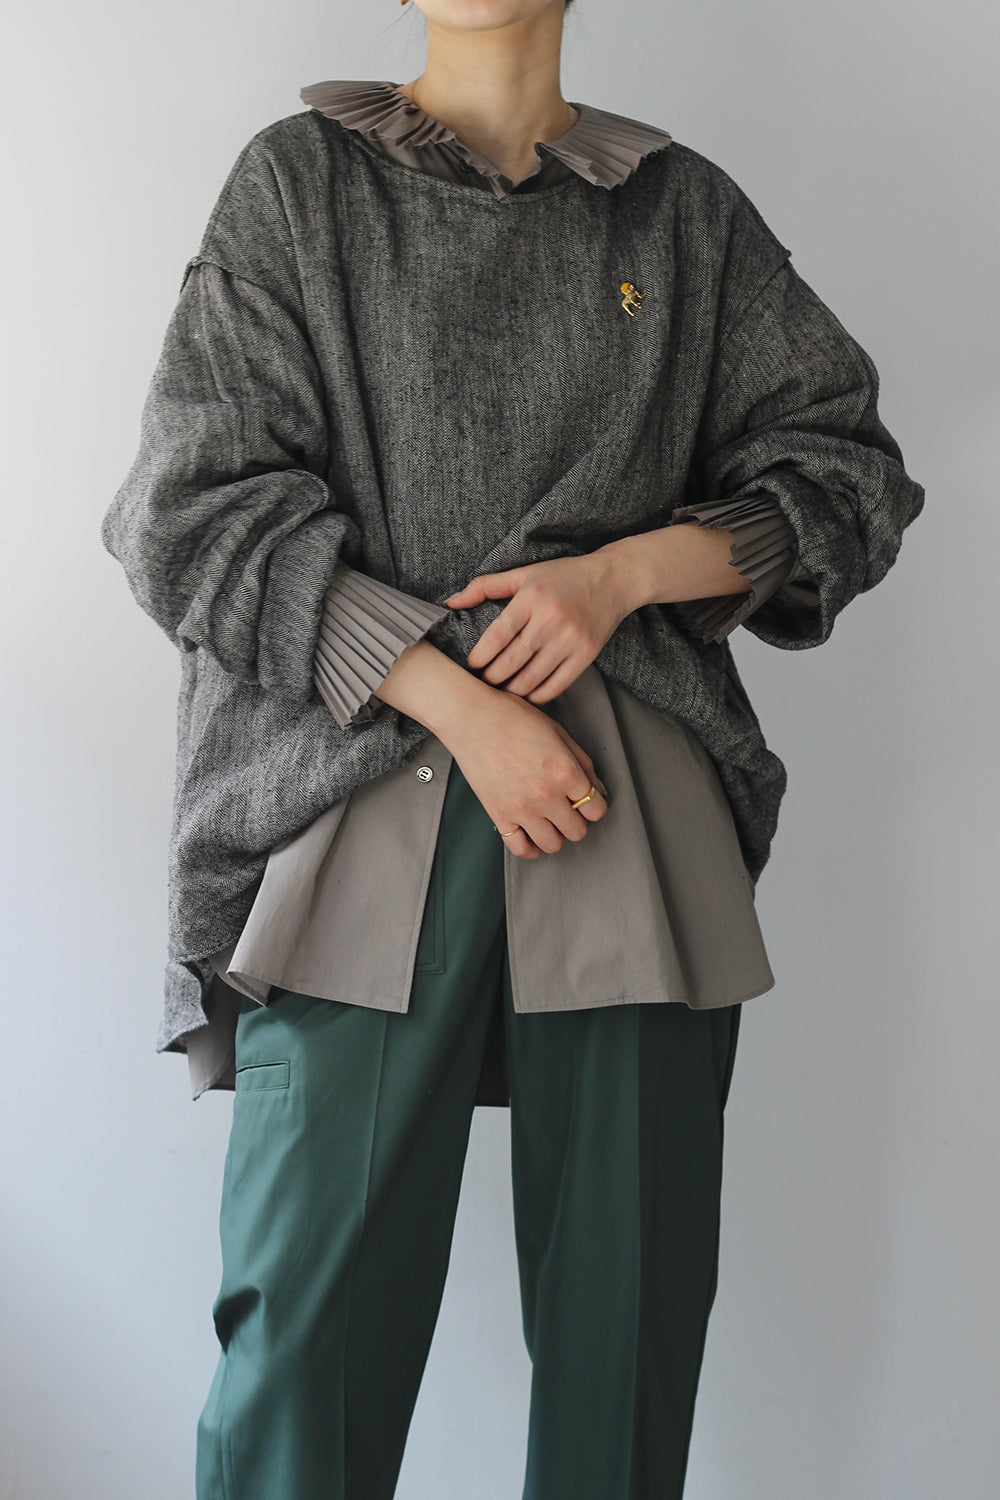 JUN MIKAMI "pleats collar shirt" (gray)